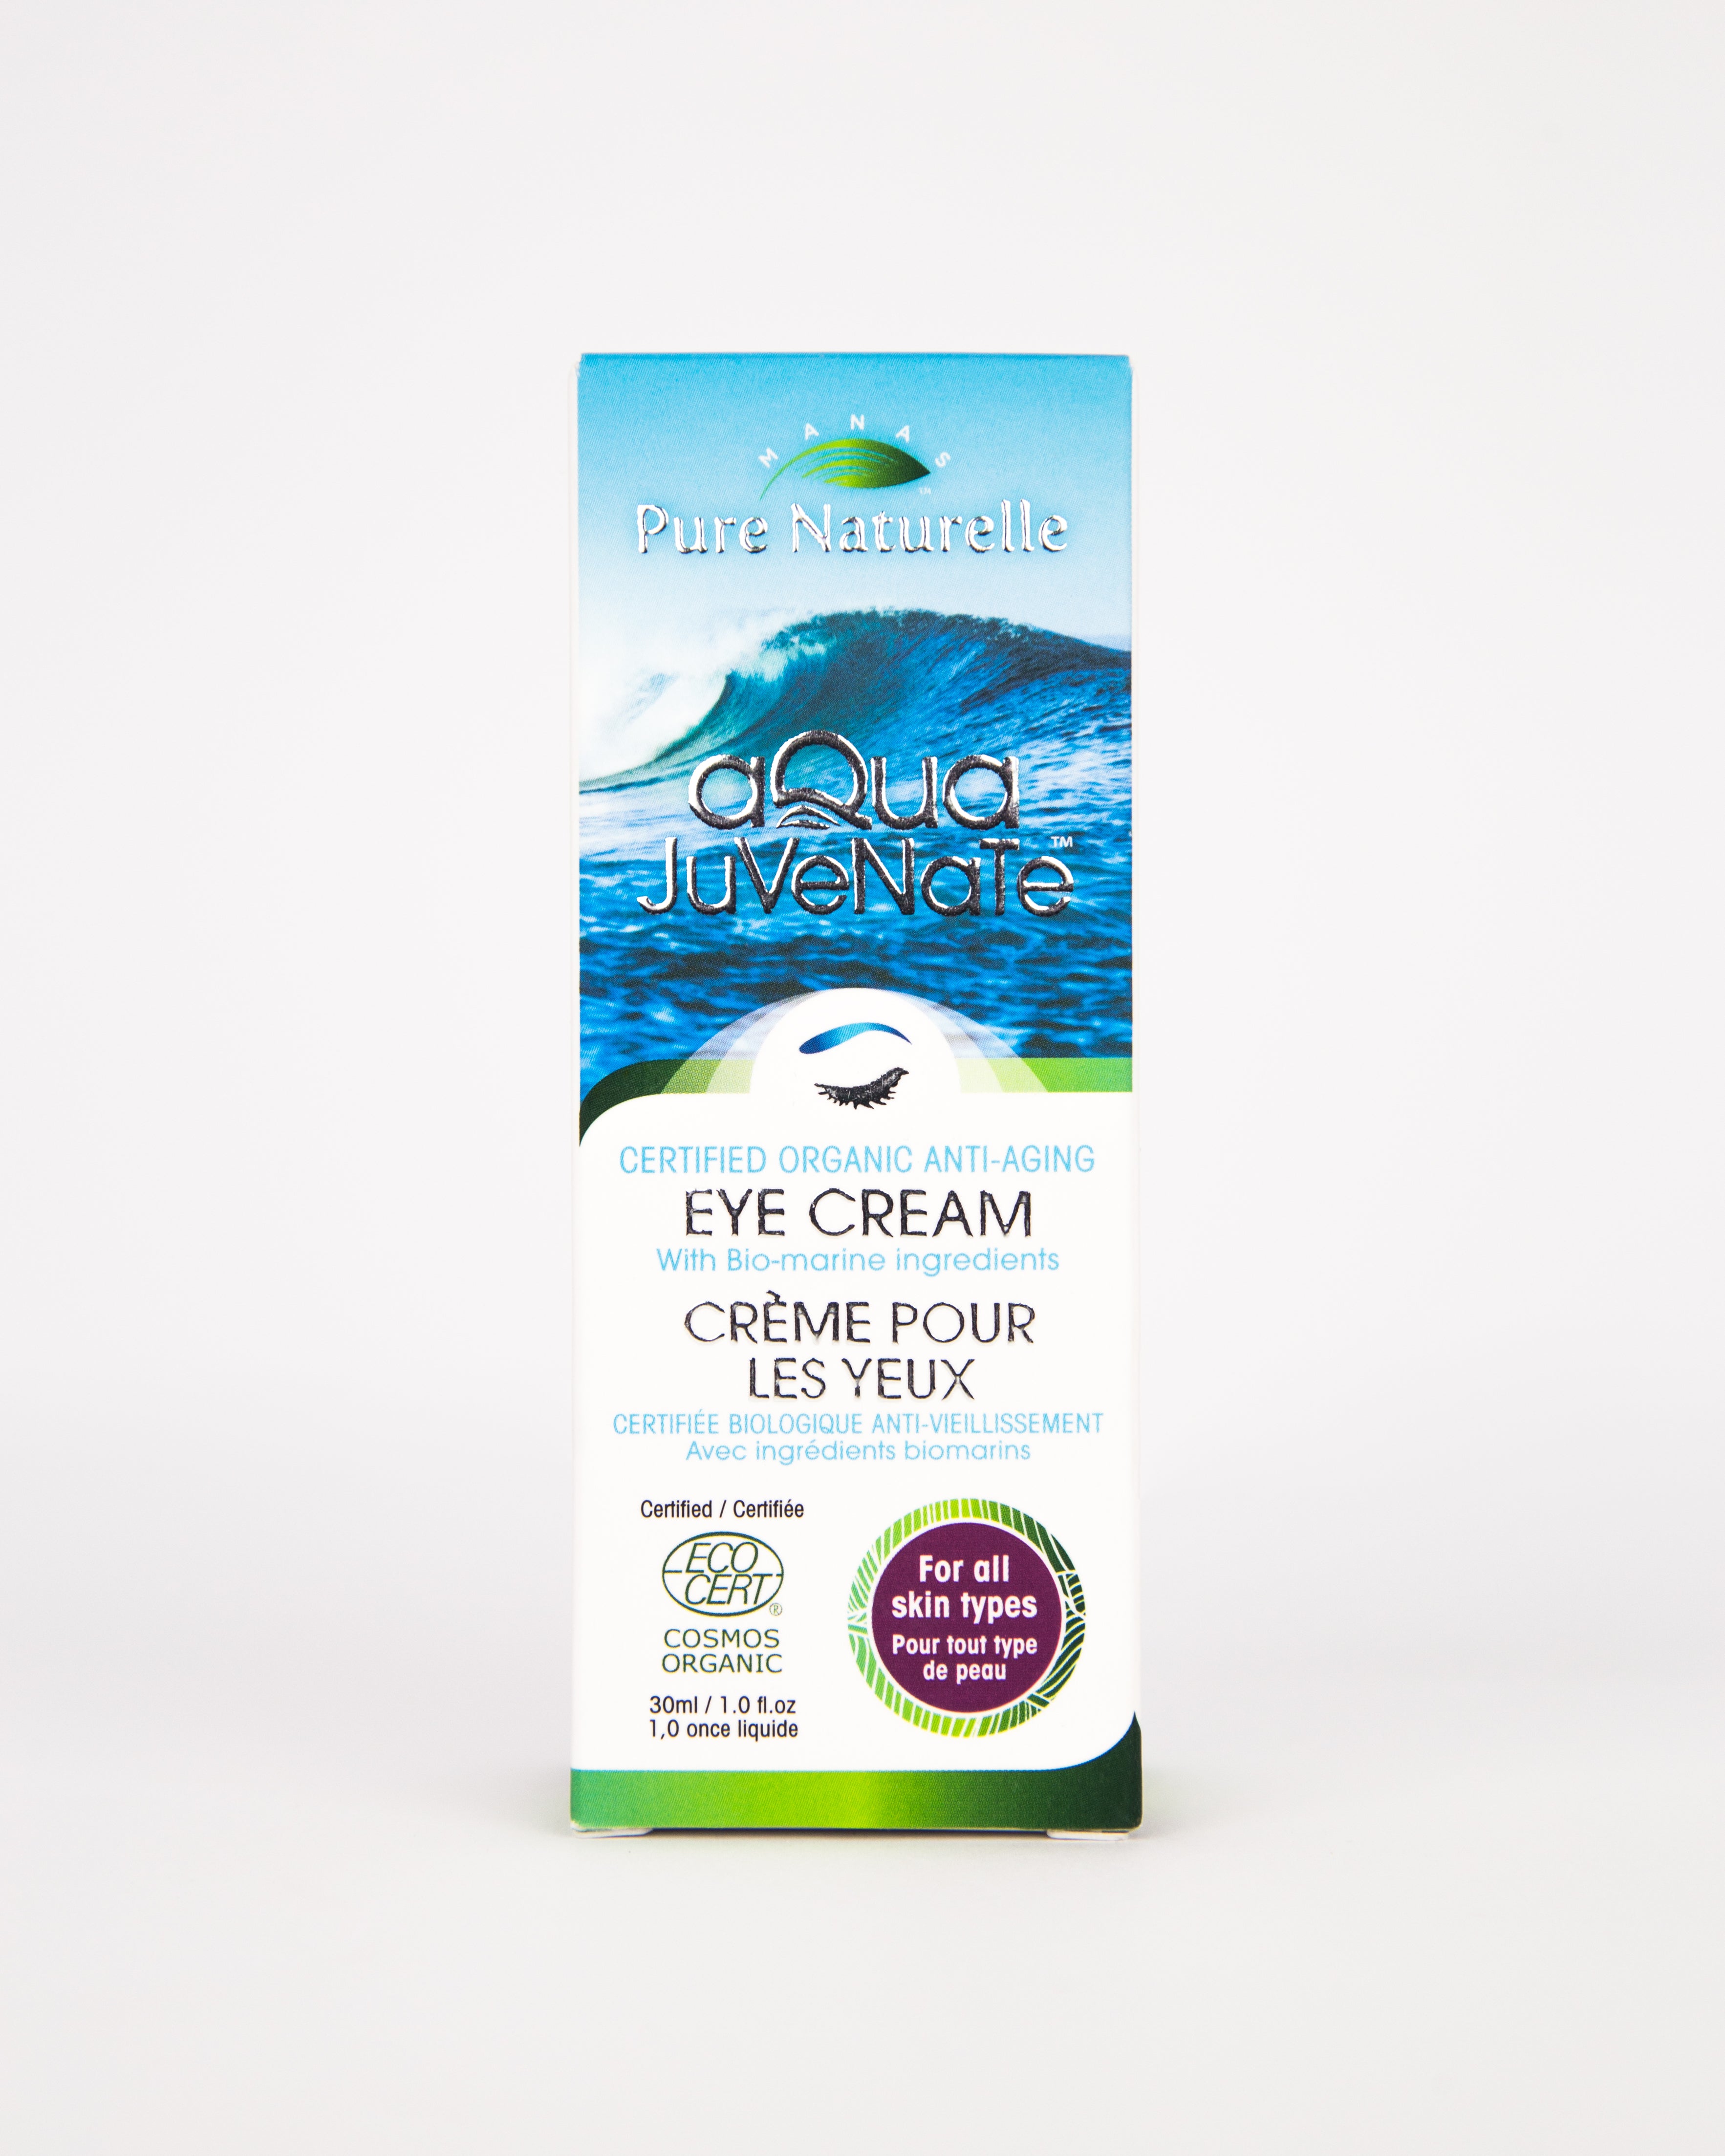 AQUA JUVENATE - Organic Anti-Aging Eye Cream - Certified Cosmos Organic